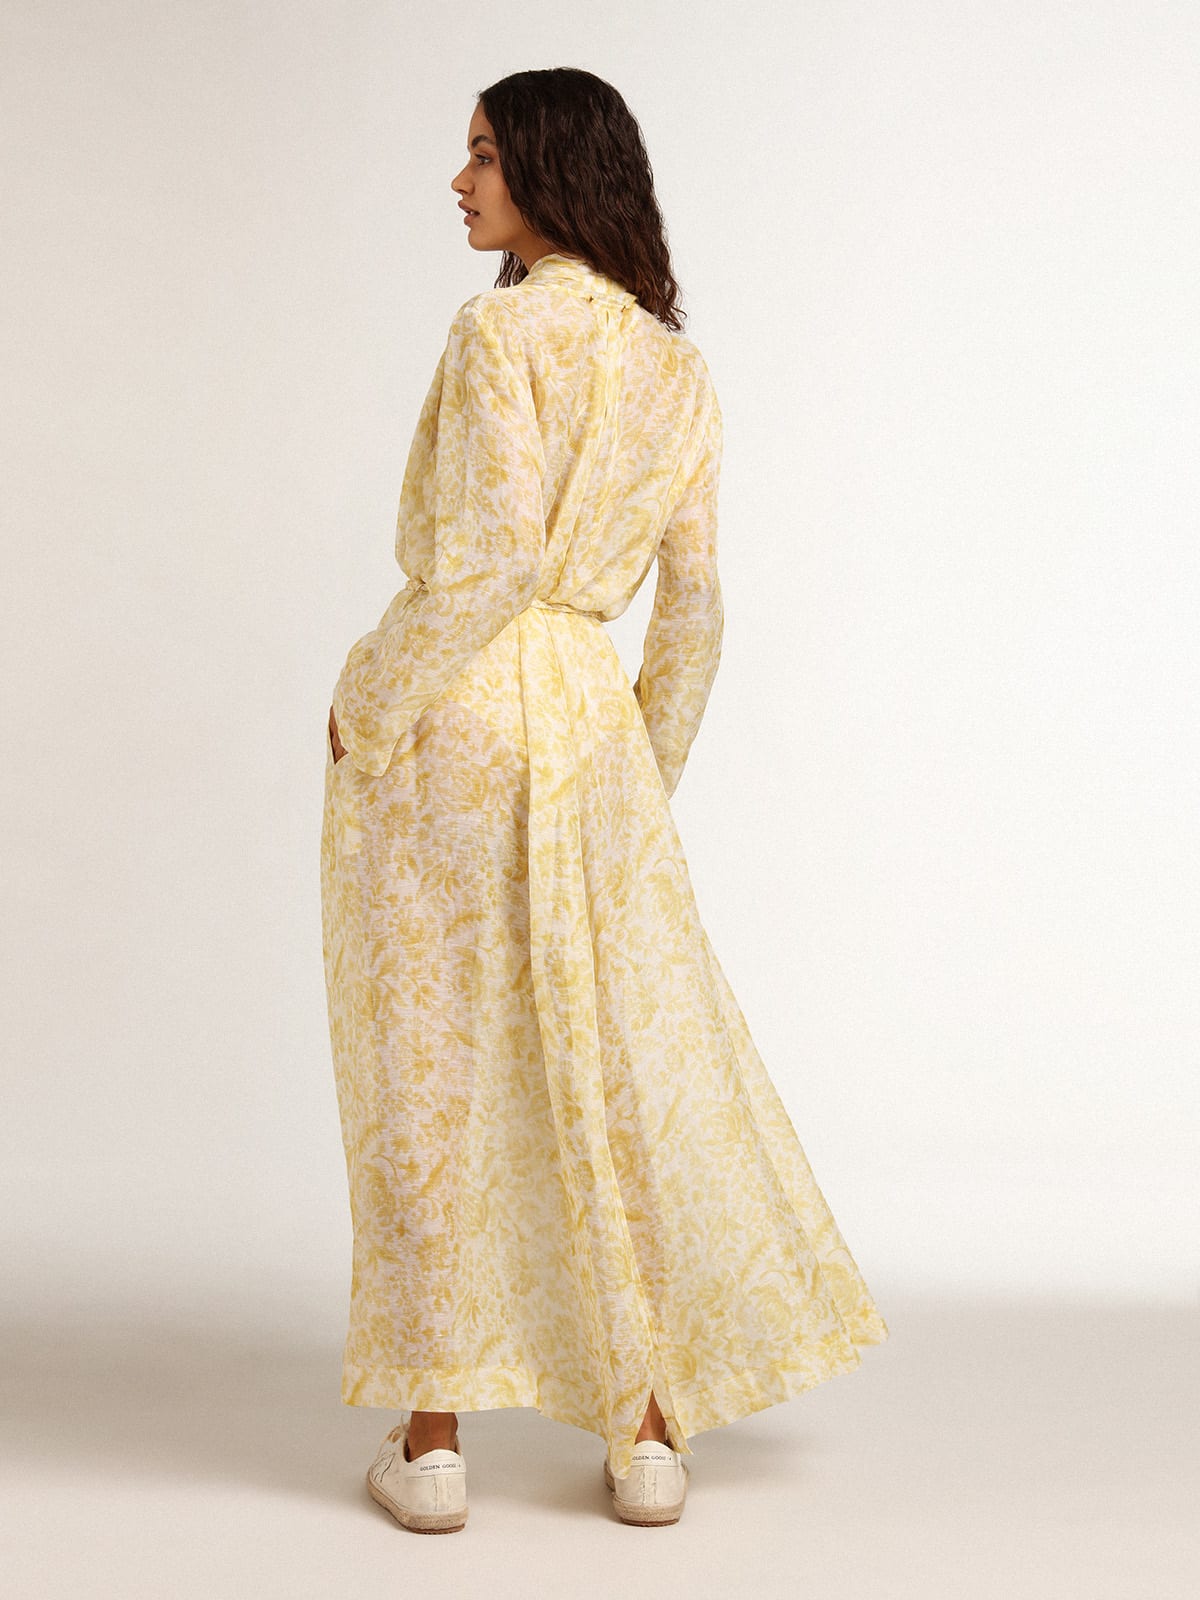 Golden Goose - Resort Collection linen blend kaftan dress with lemon yellow print in 